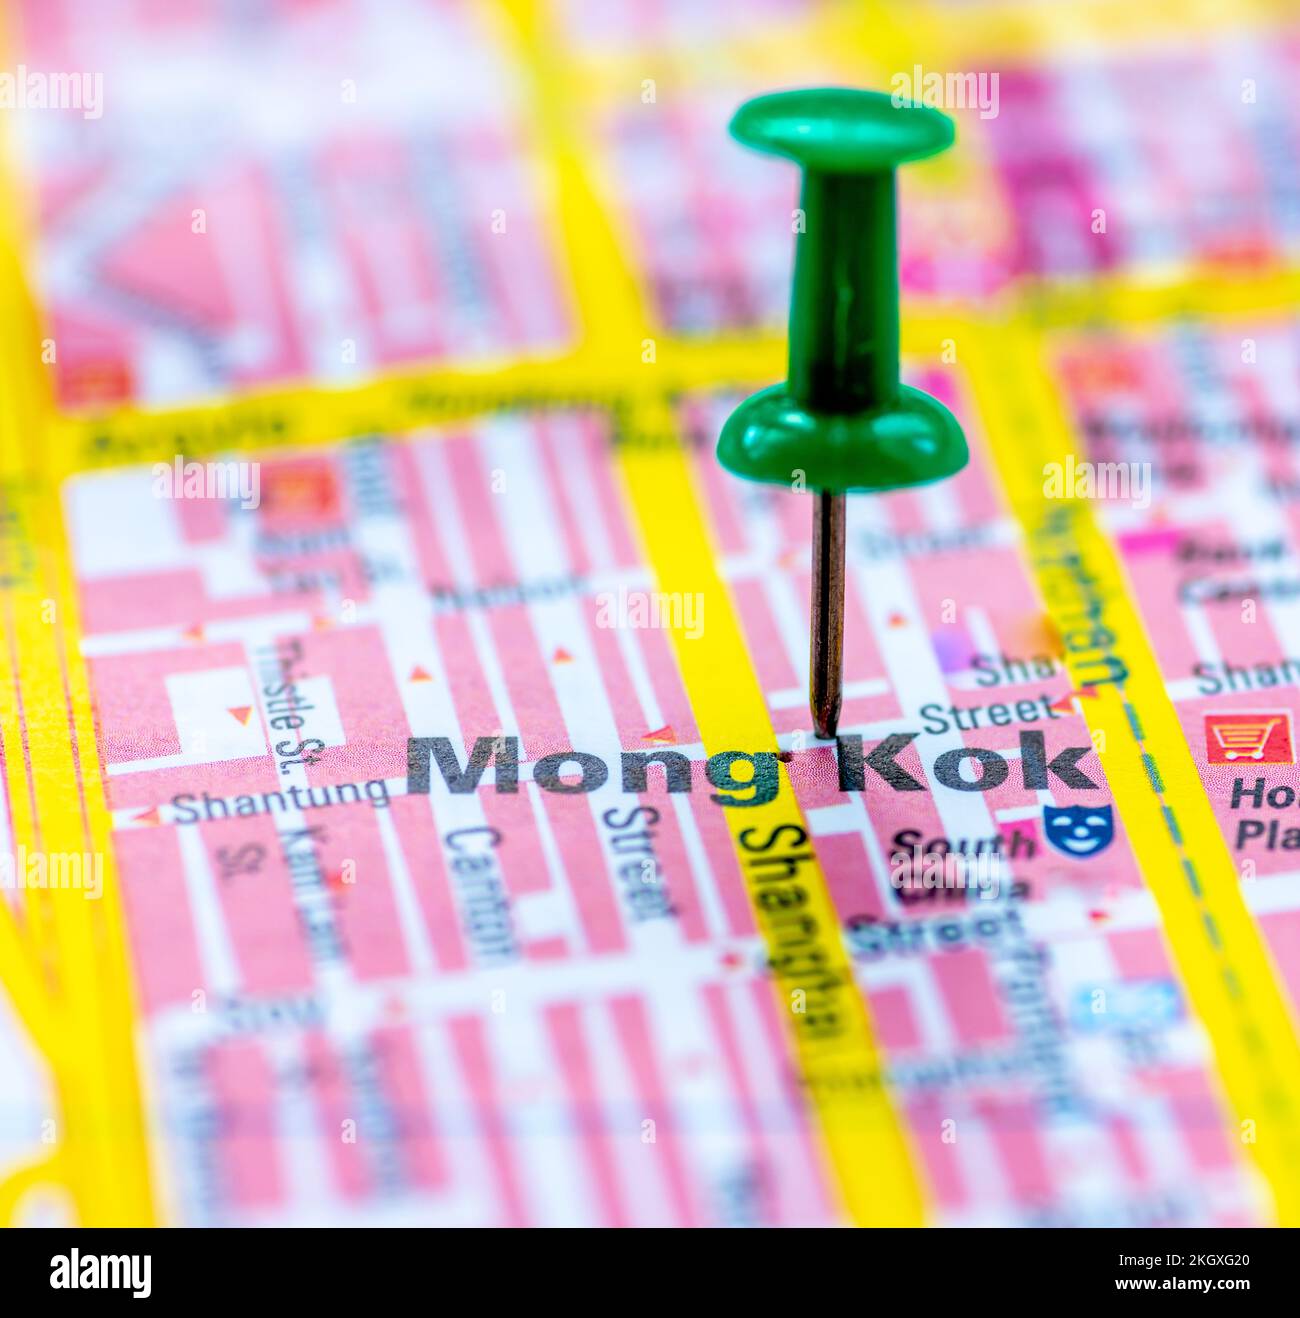 The map location for Mong Kok, Kowloon, Hong Kong, China, marked with a green pushpin. Stock Photo